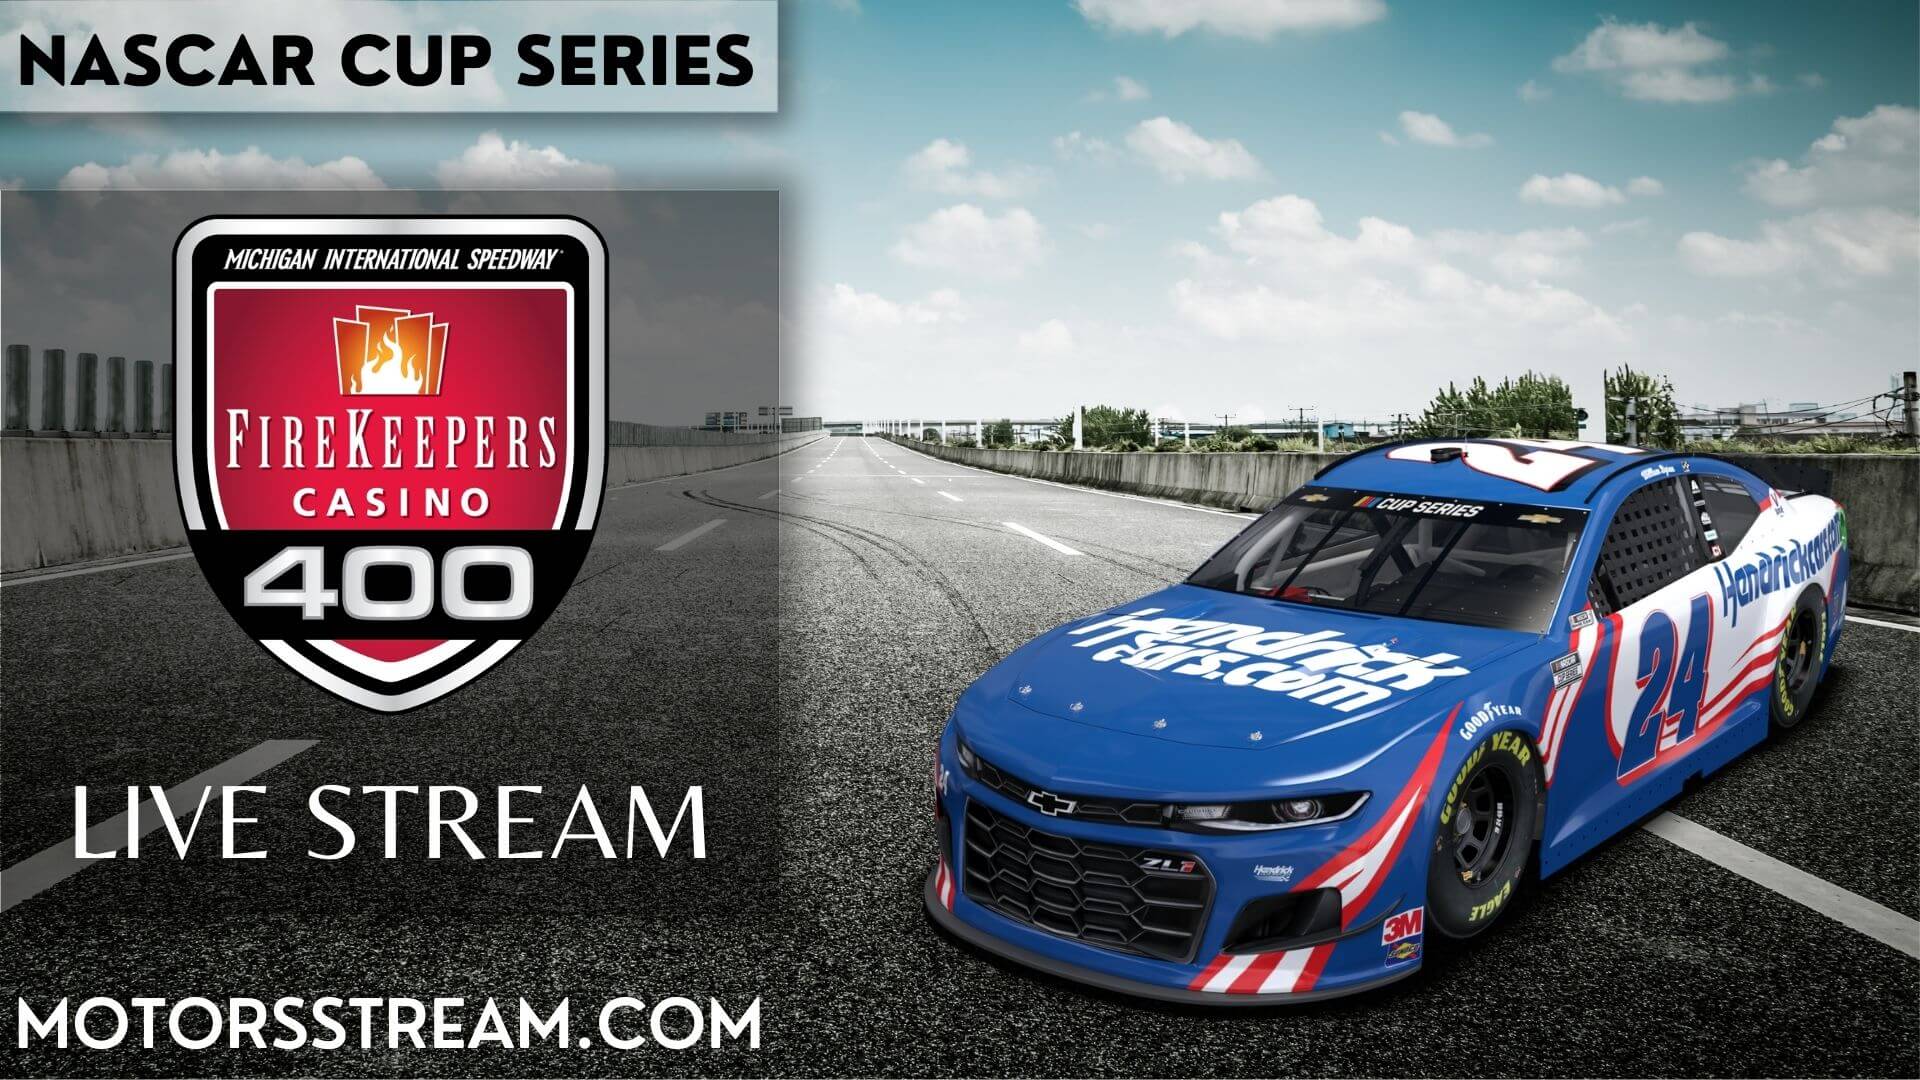 FireKeepers Casino 400 Live Stream NASCAR Cup 2019